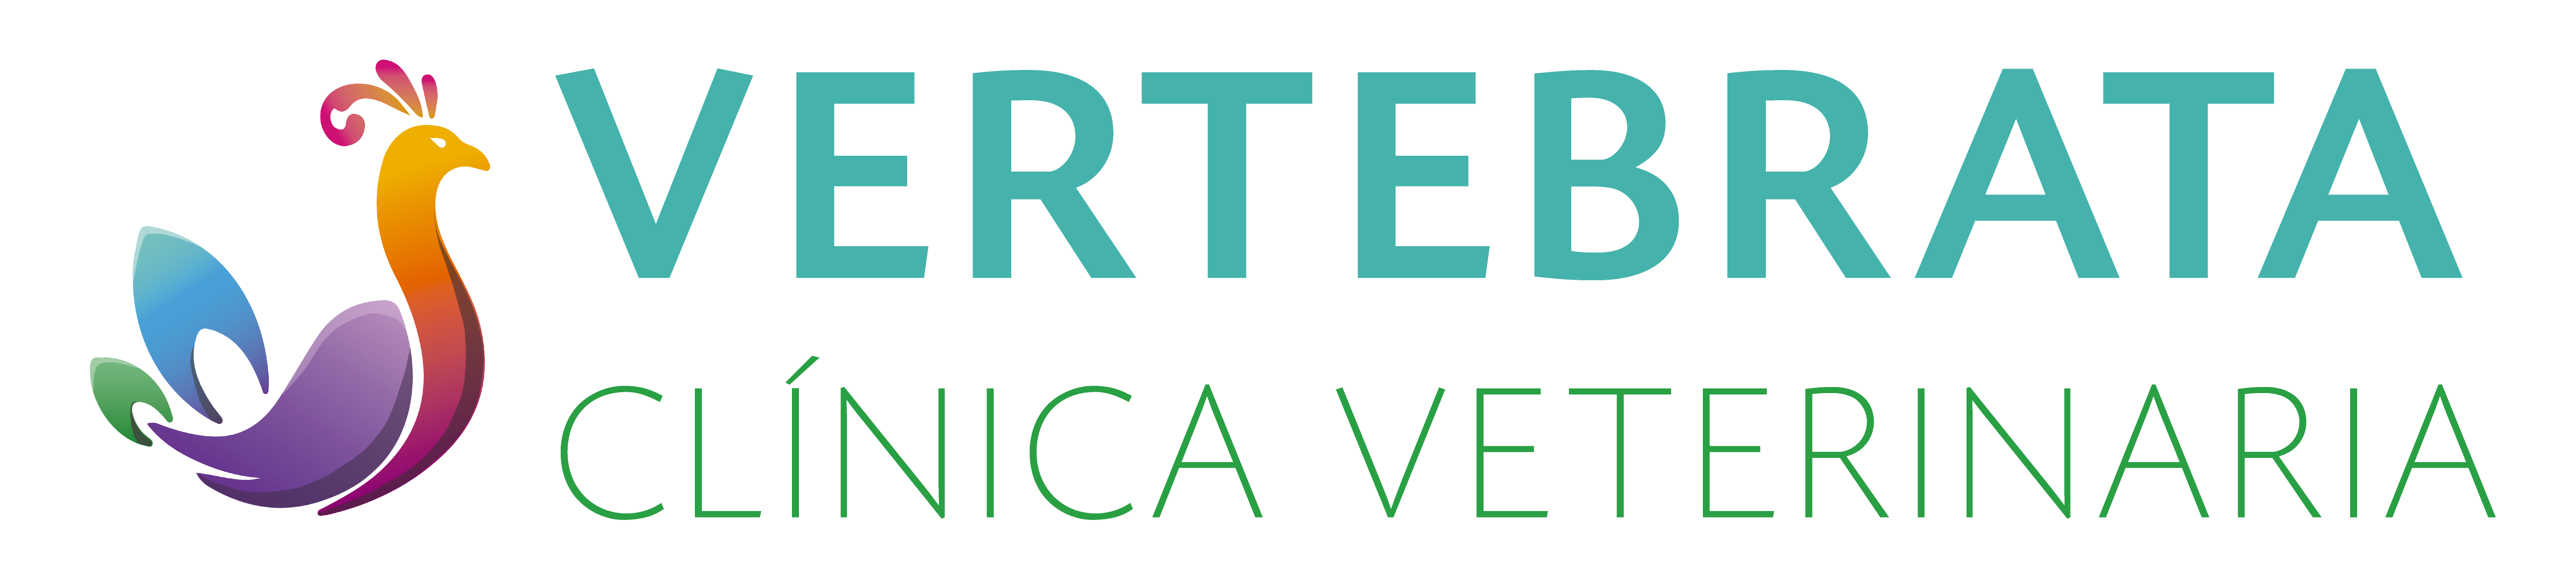 vertebratavet.com